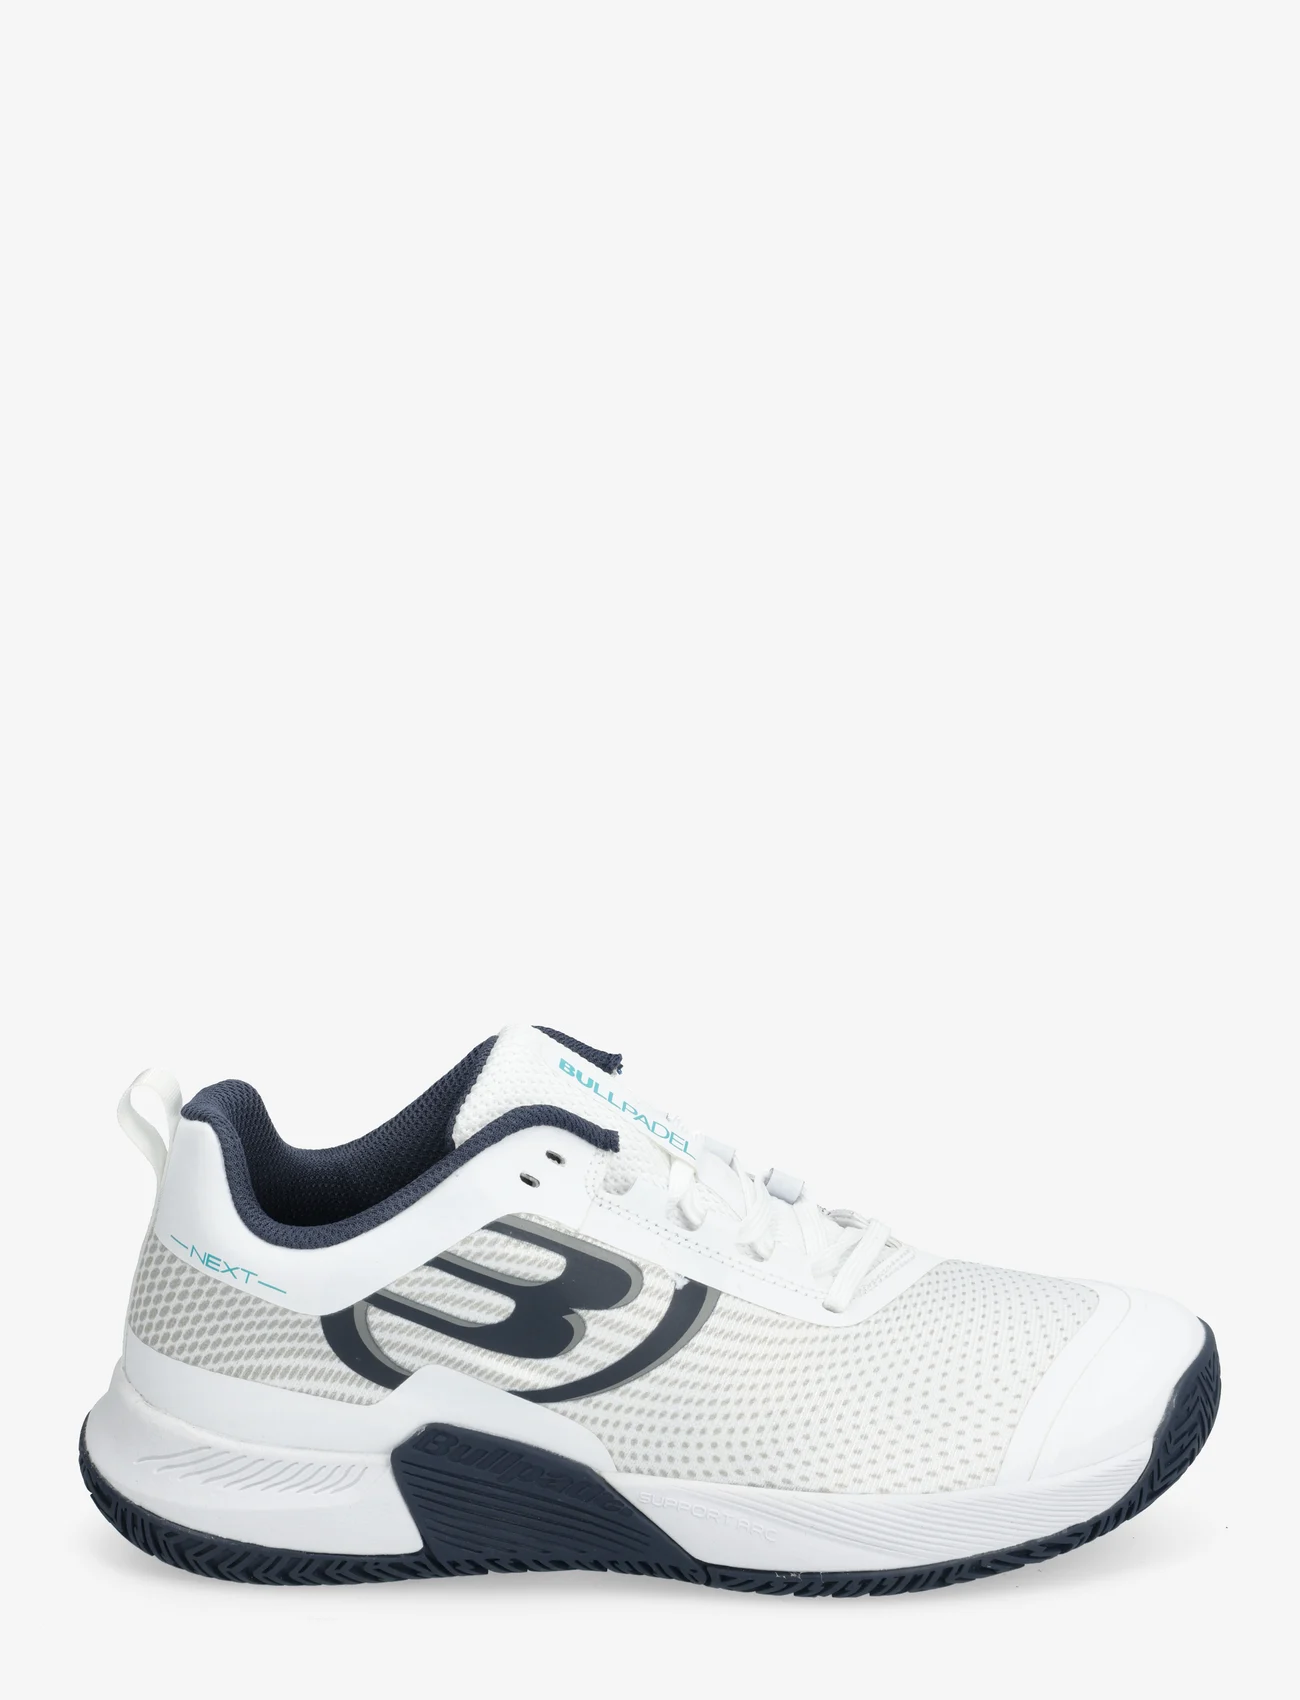 Bullpadel - NEXT HYBR PRO 22I - racketsports shoes - white/blue - 1